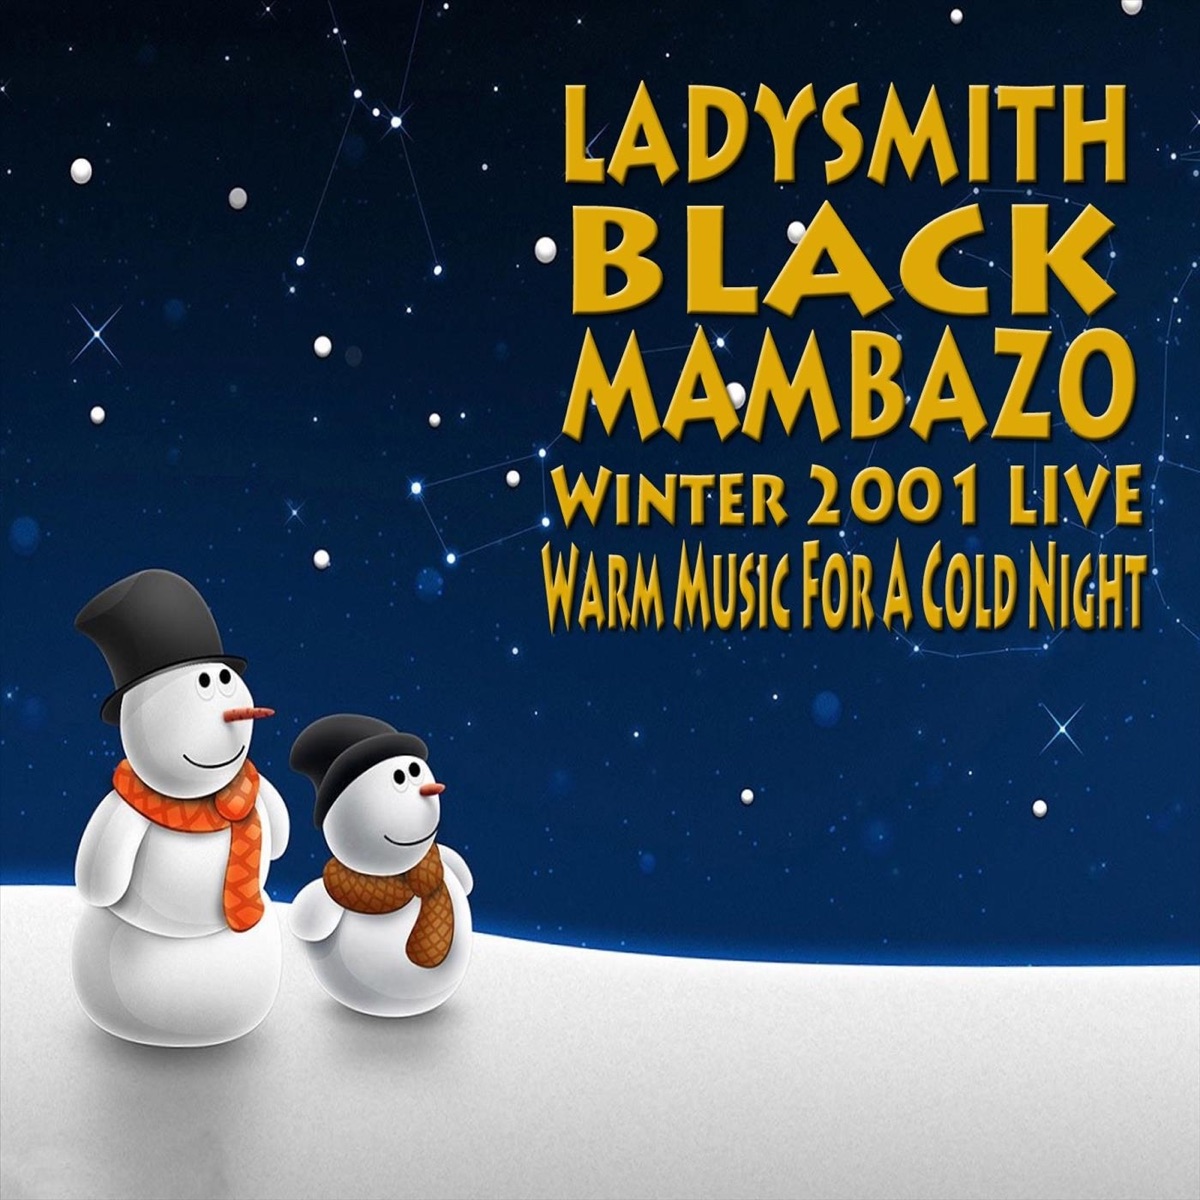 Ladysmith Black Mambazo - Winter 2001 Live: Warm Music for a Cold Night!